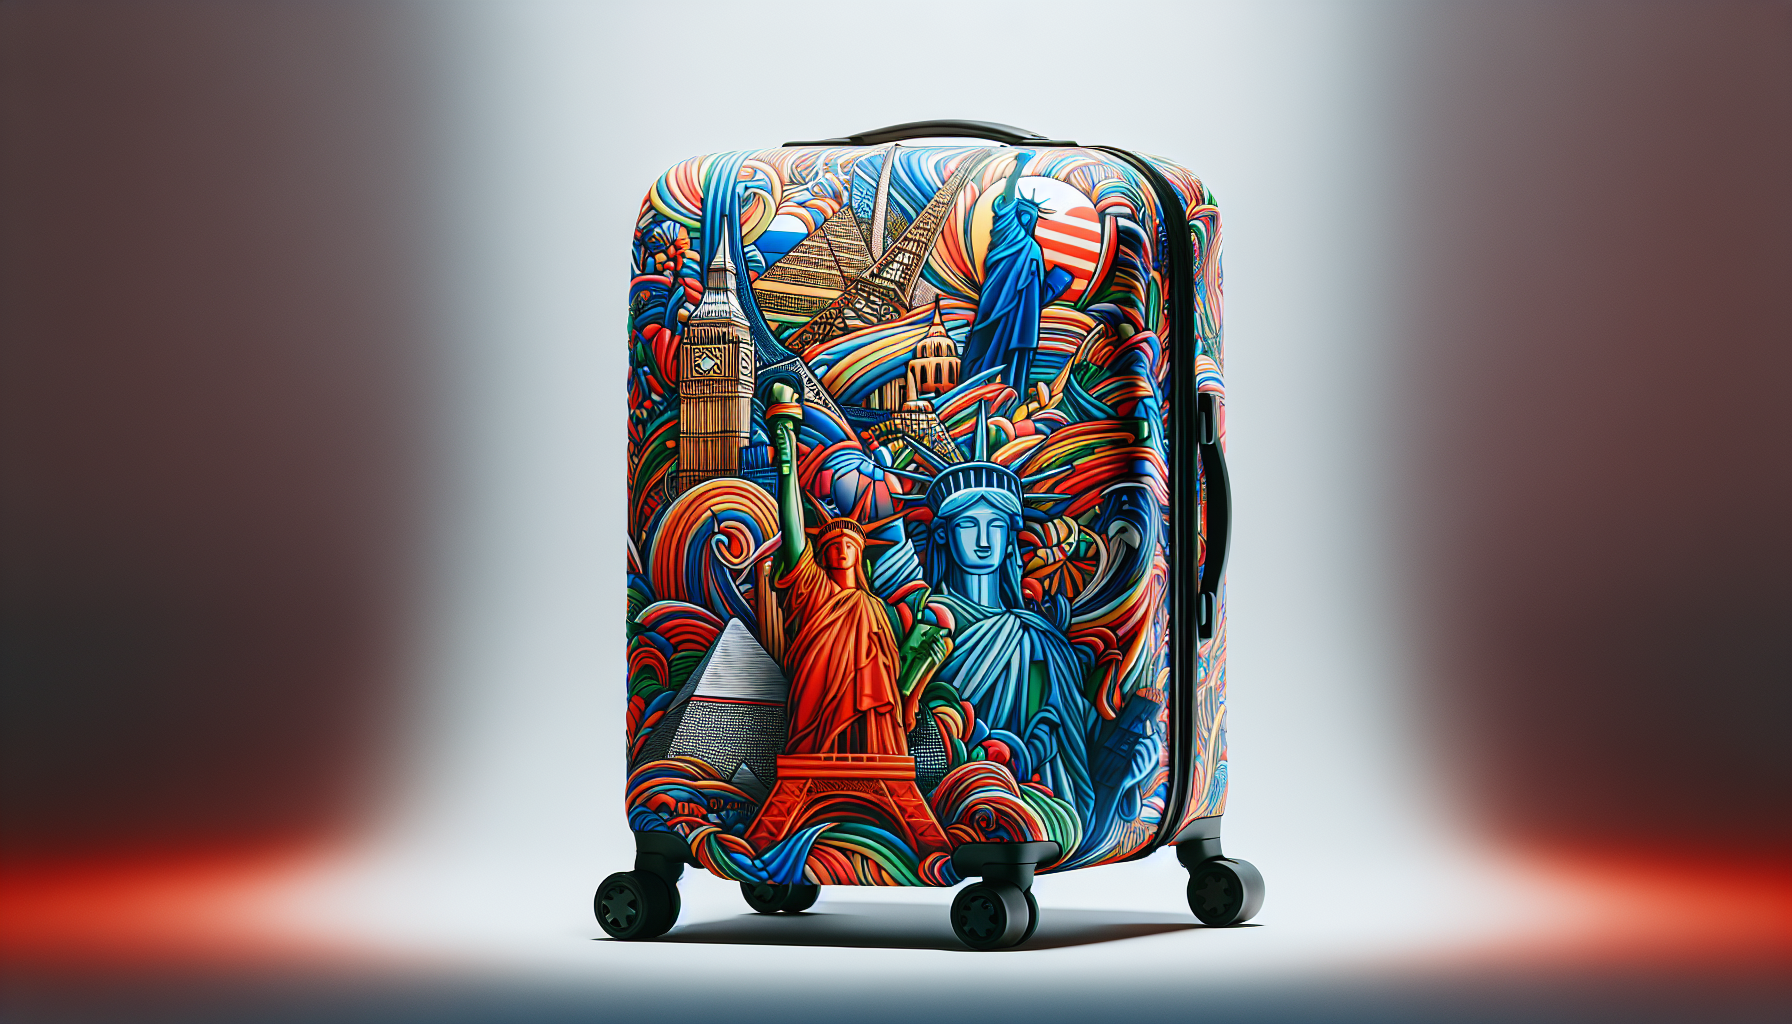 Custom luggage cover with travel destination design